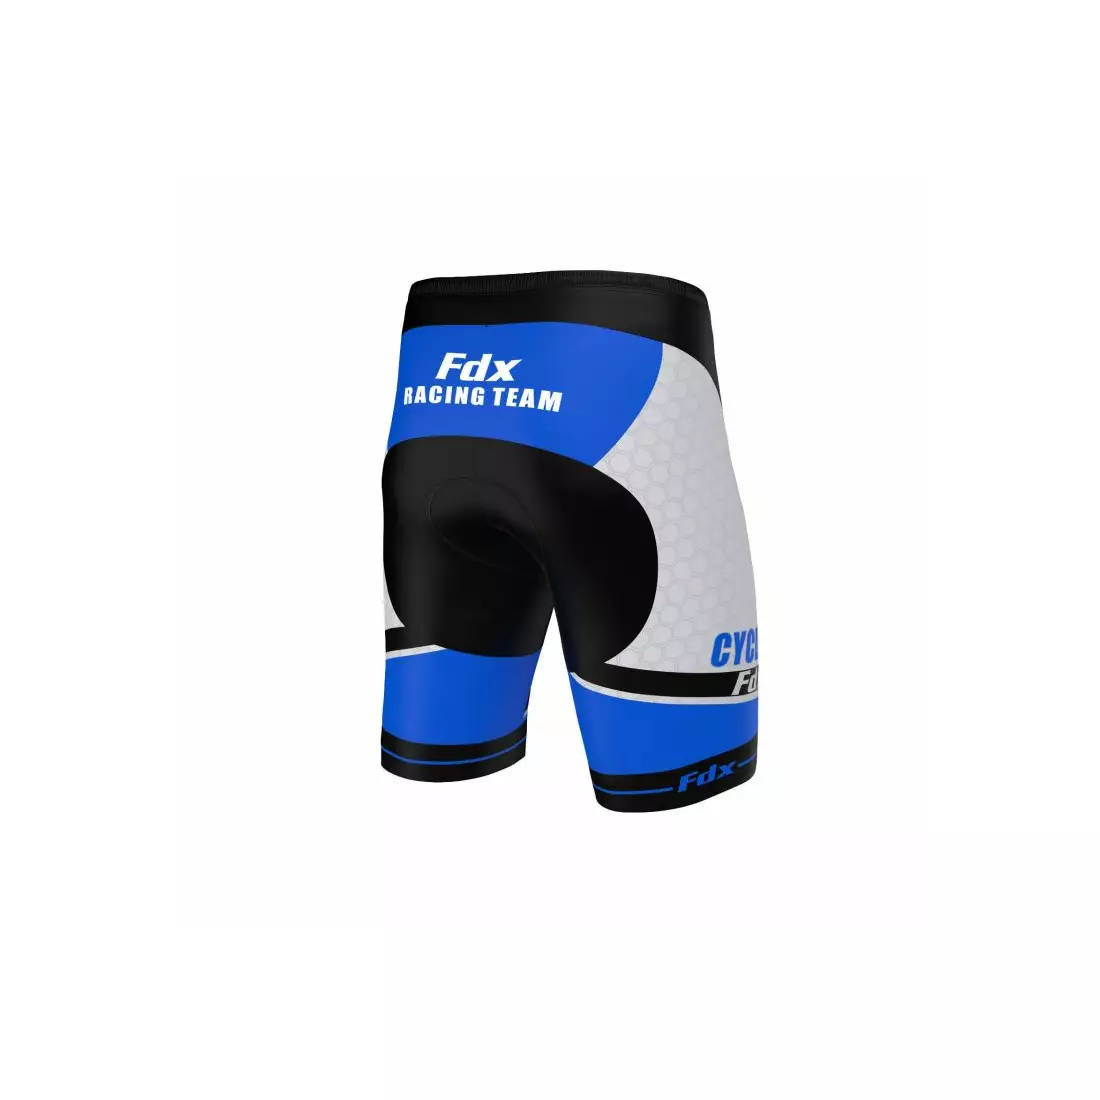 FDX 1070 men's bibless cycling shorts, black and blue